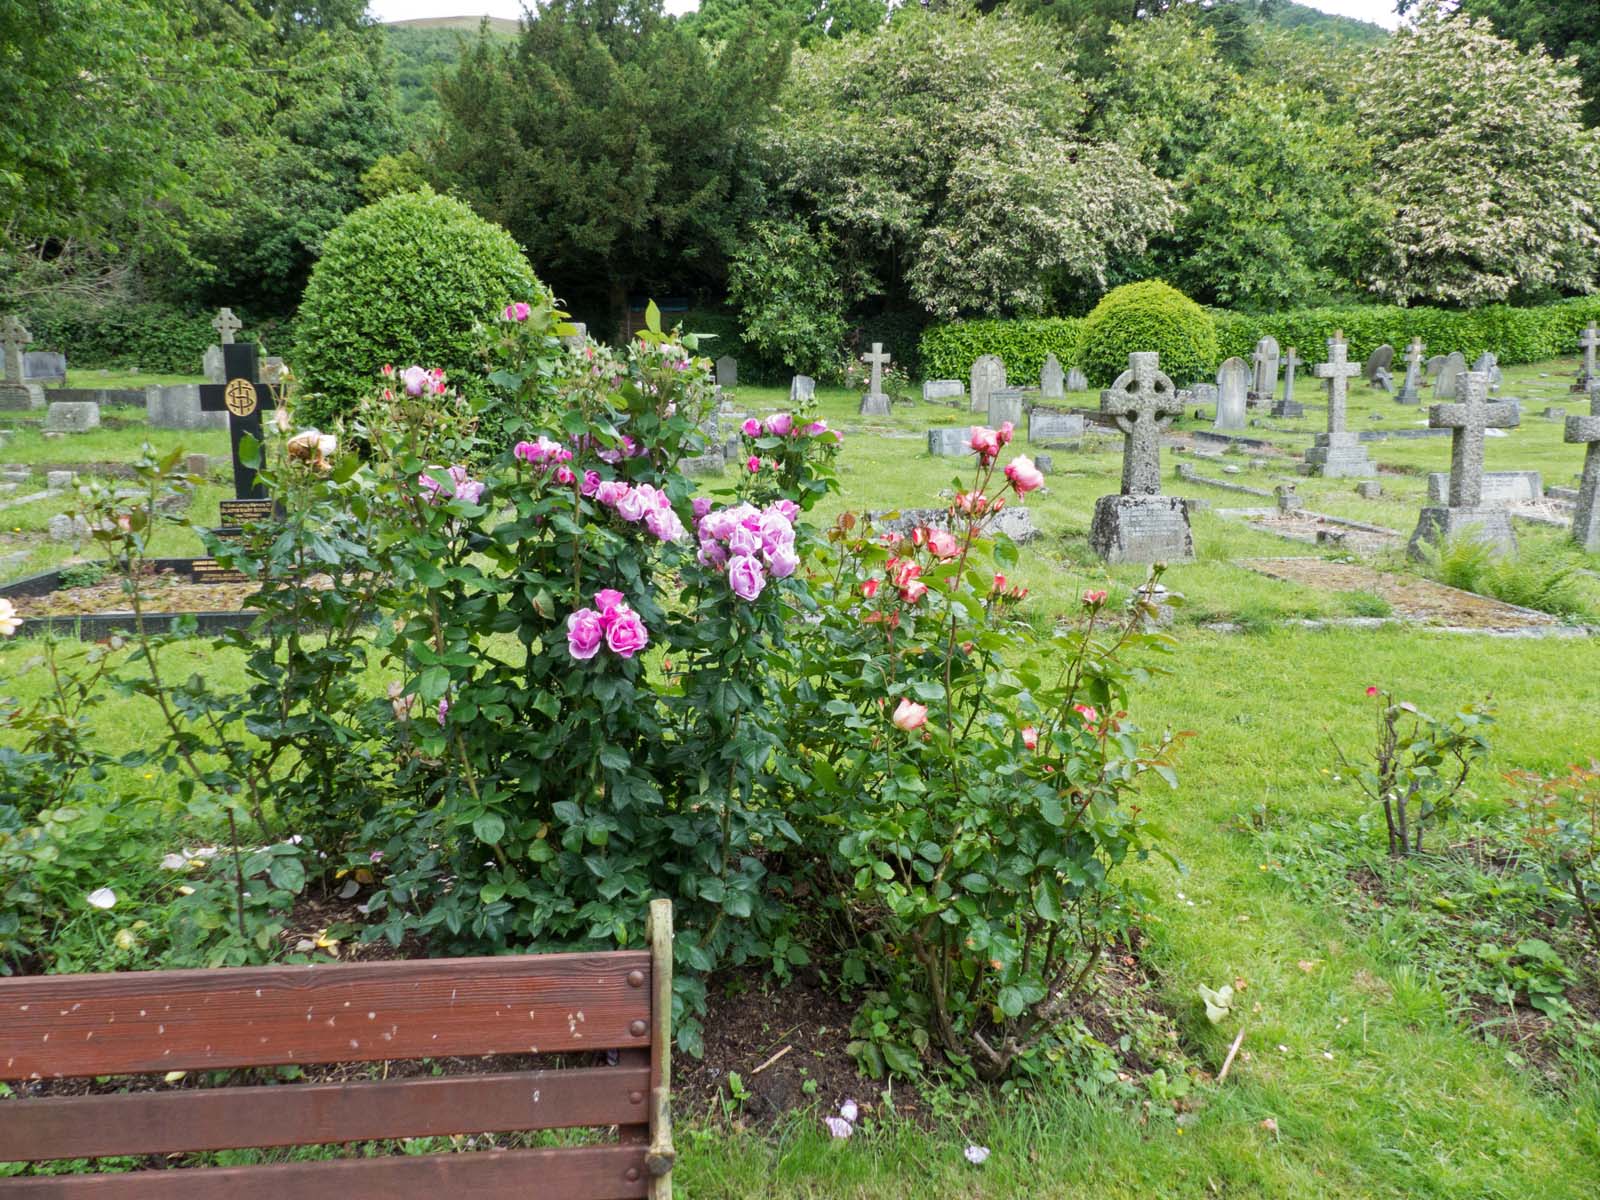 View across Malvern Wells cemetery